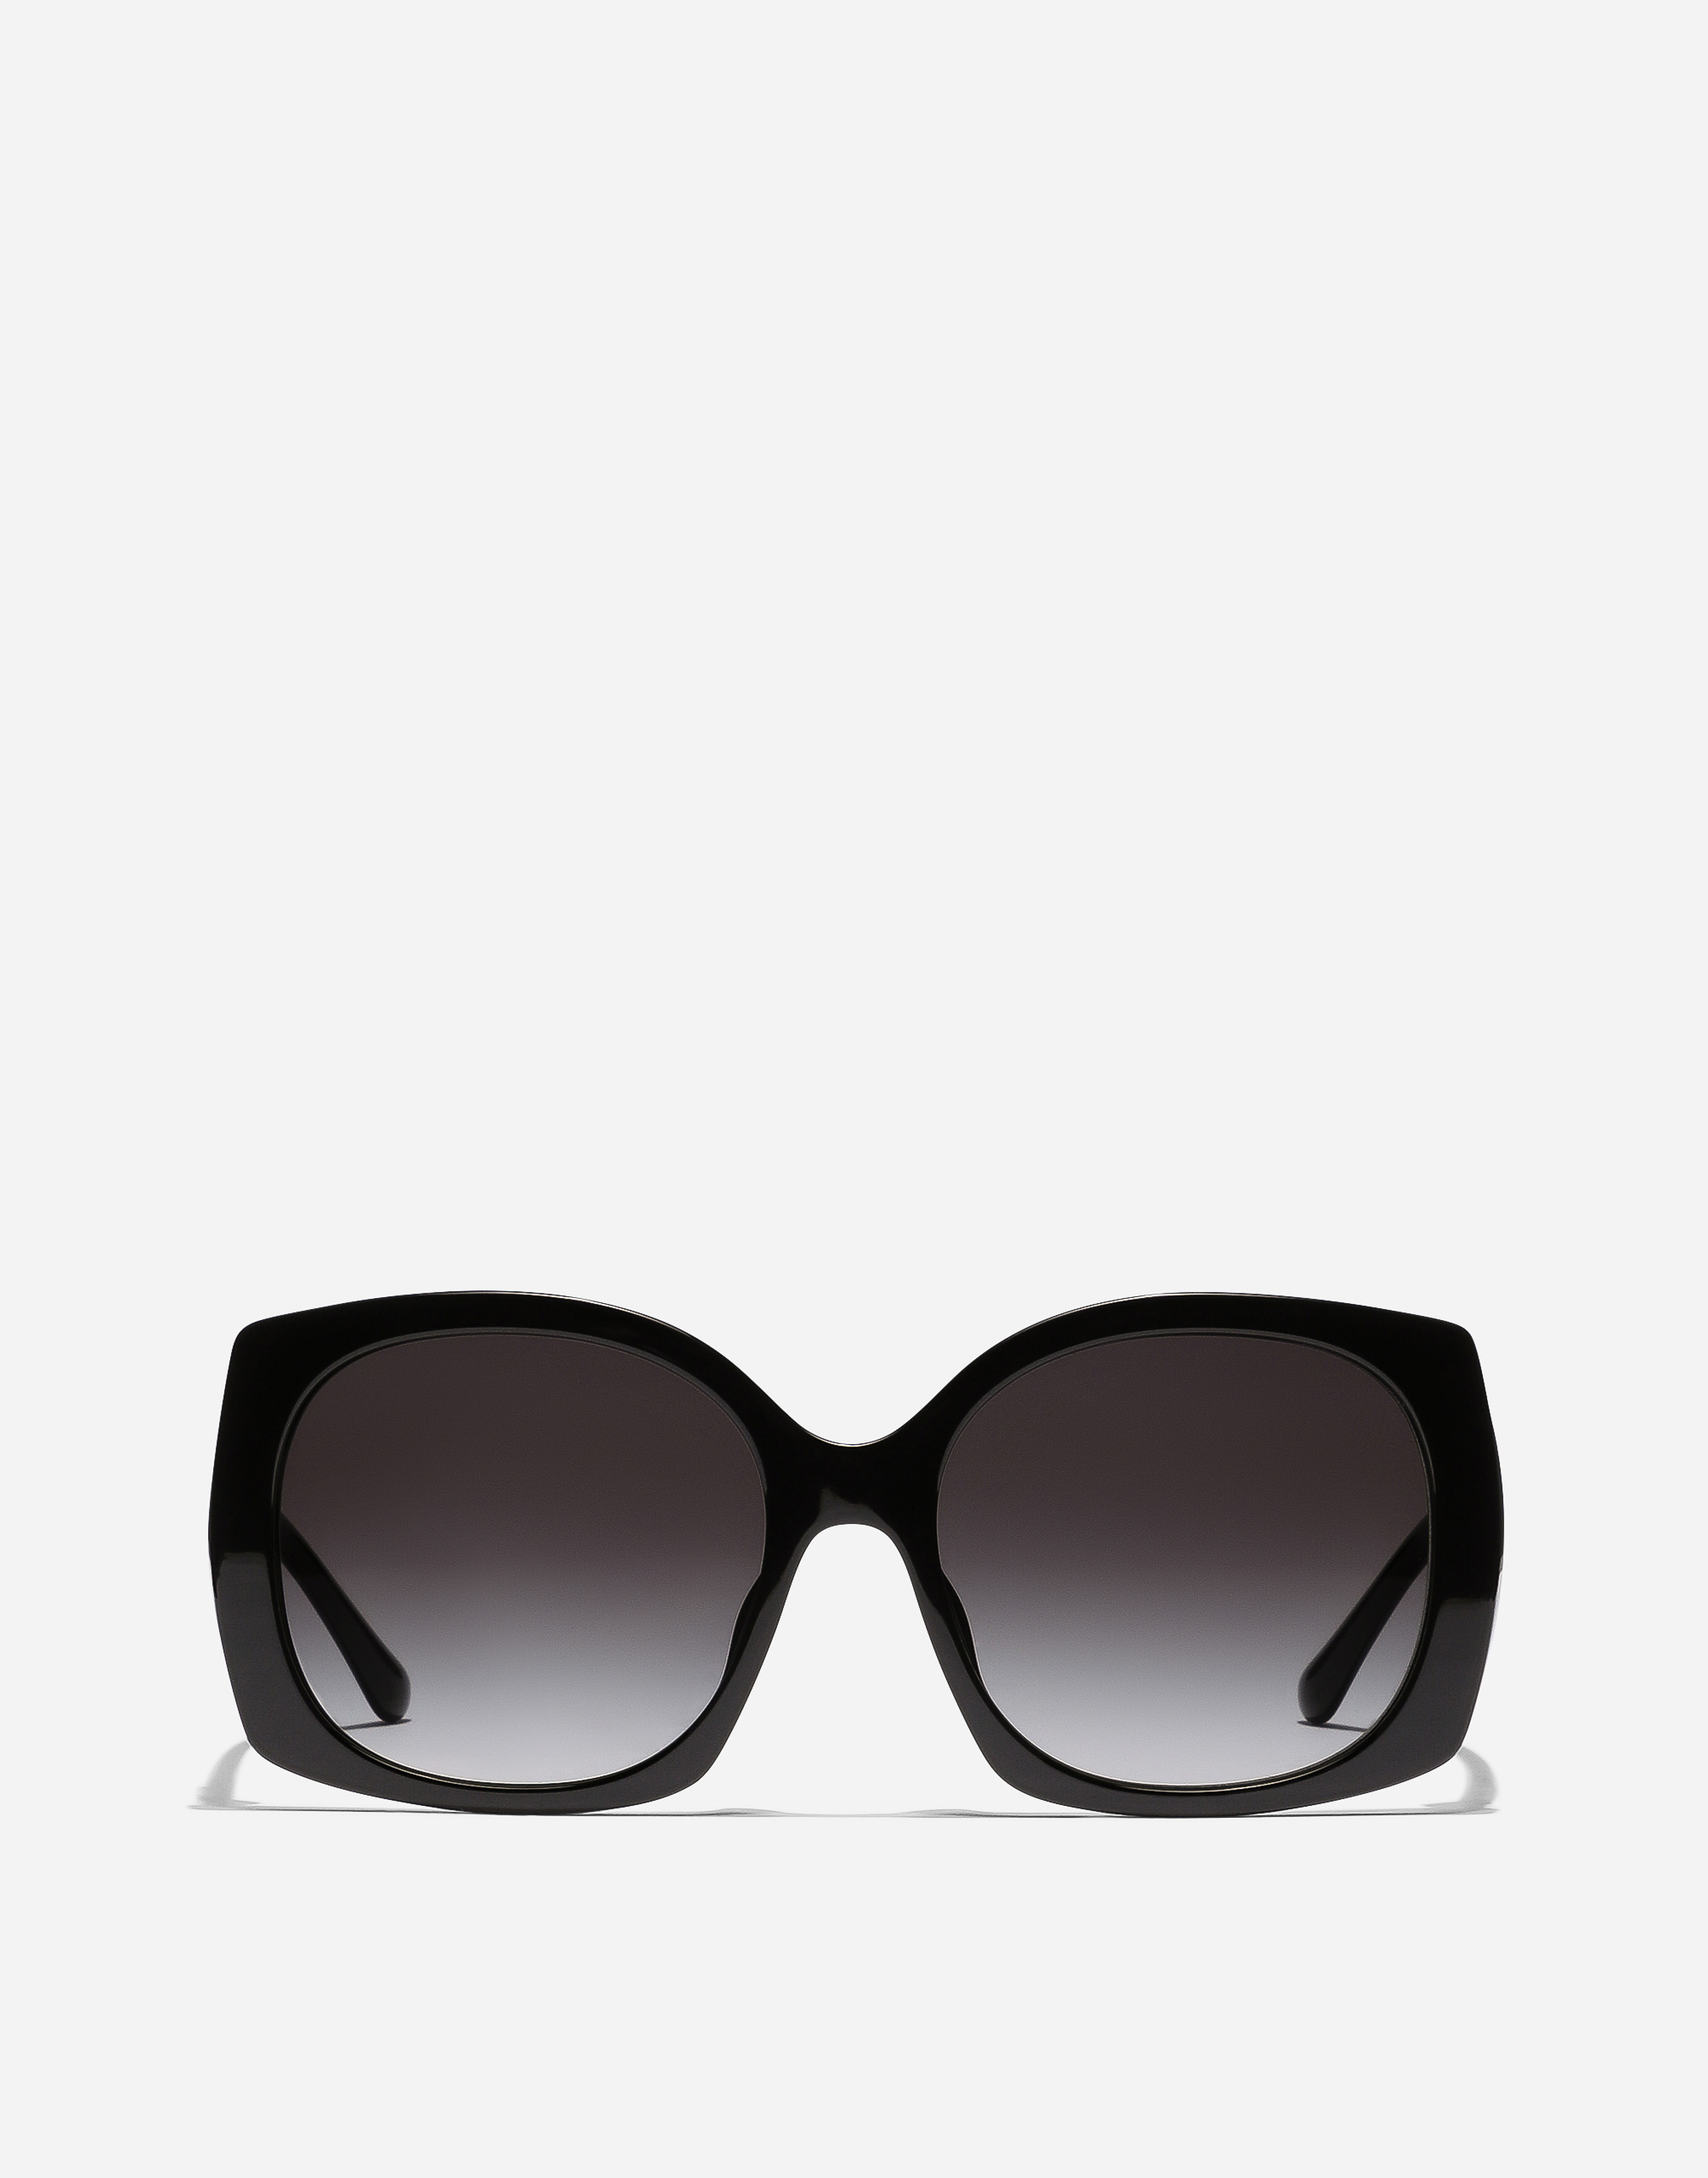 Print family sunglasses in Black